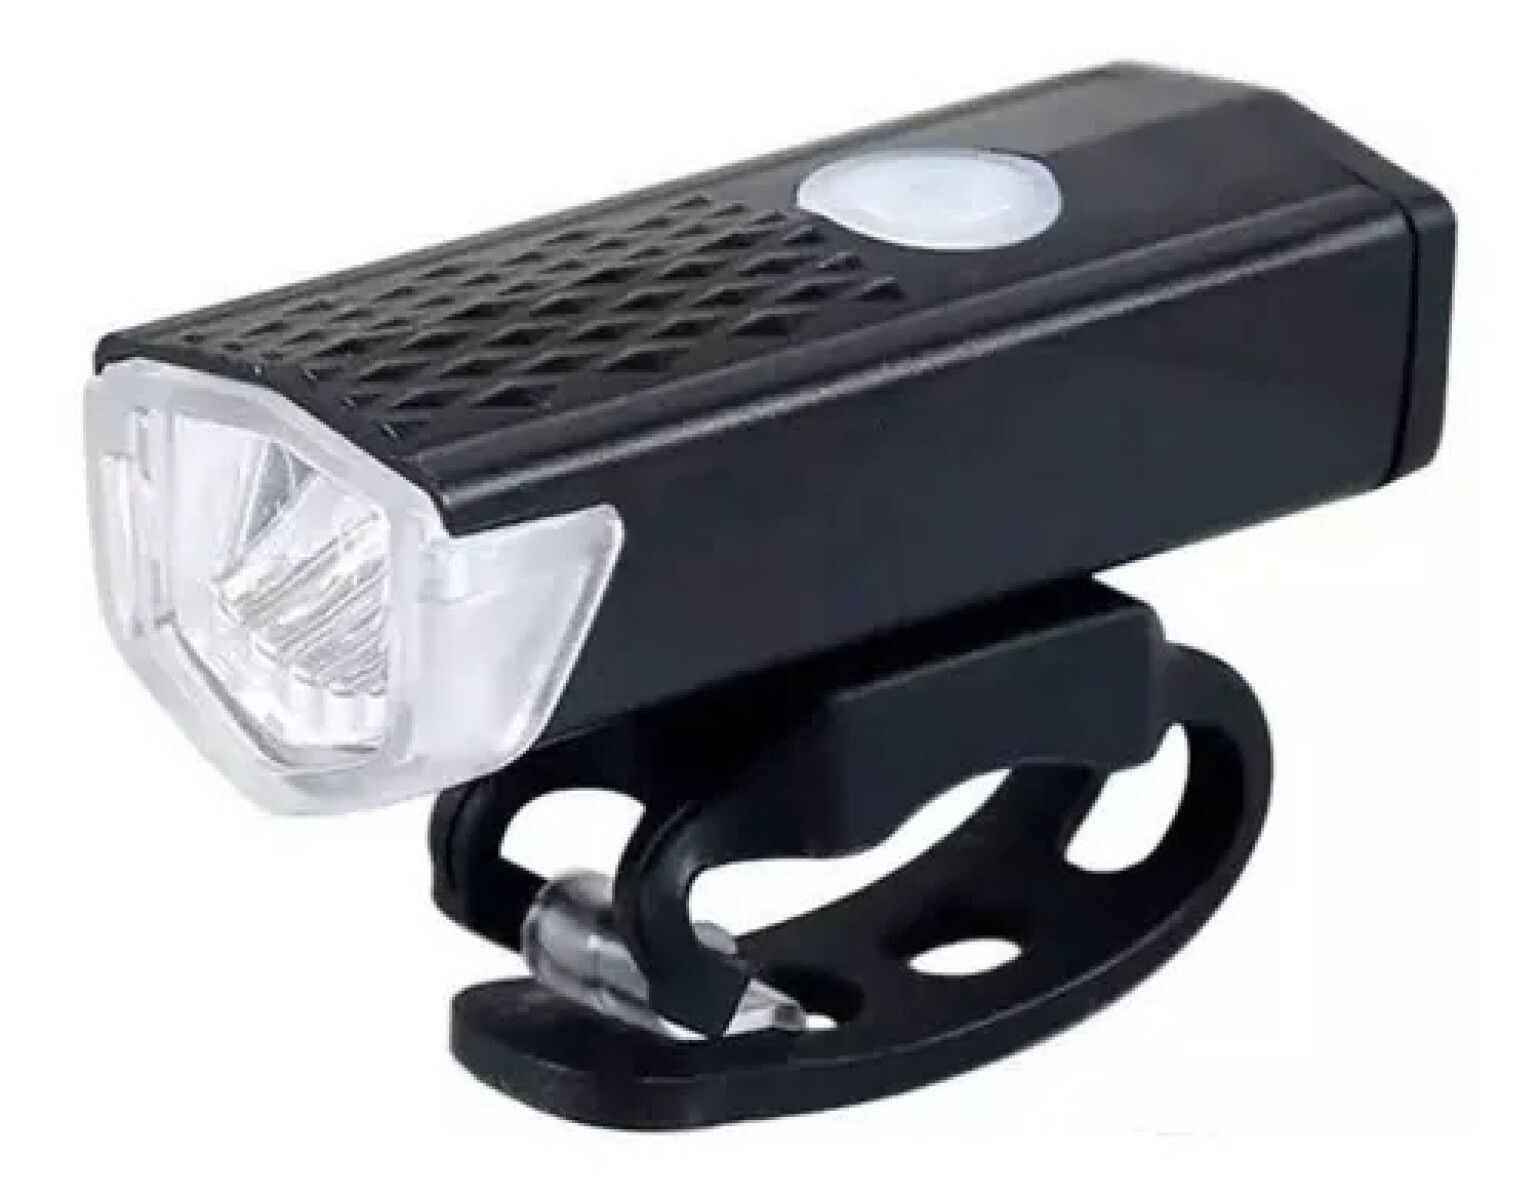 LUZ DELANTERA 400 LUMEN BICICLETA LED RECARGABLE USB - Luz Delantera 400 Lumen Bicicleta Led Recargable Usb 